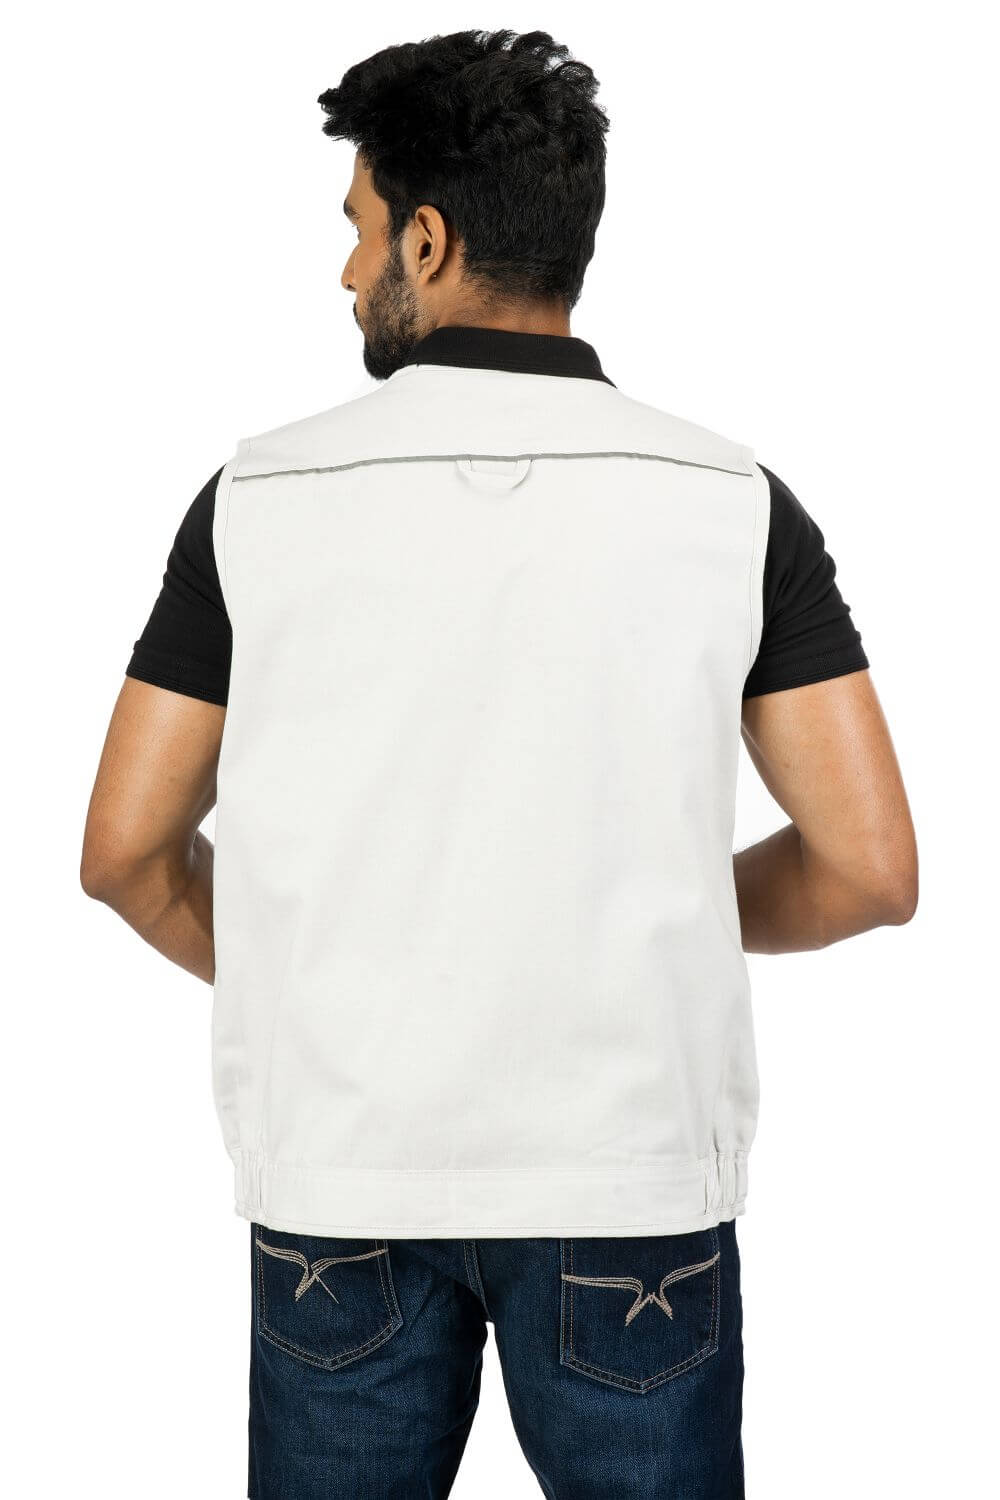 Stylised mid-torso bone pockets with concealed zips. An ergonomically designed multi-utility safari Beige vest.